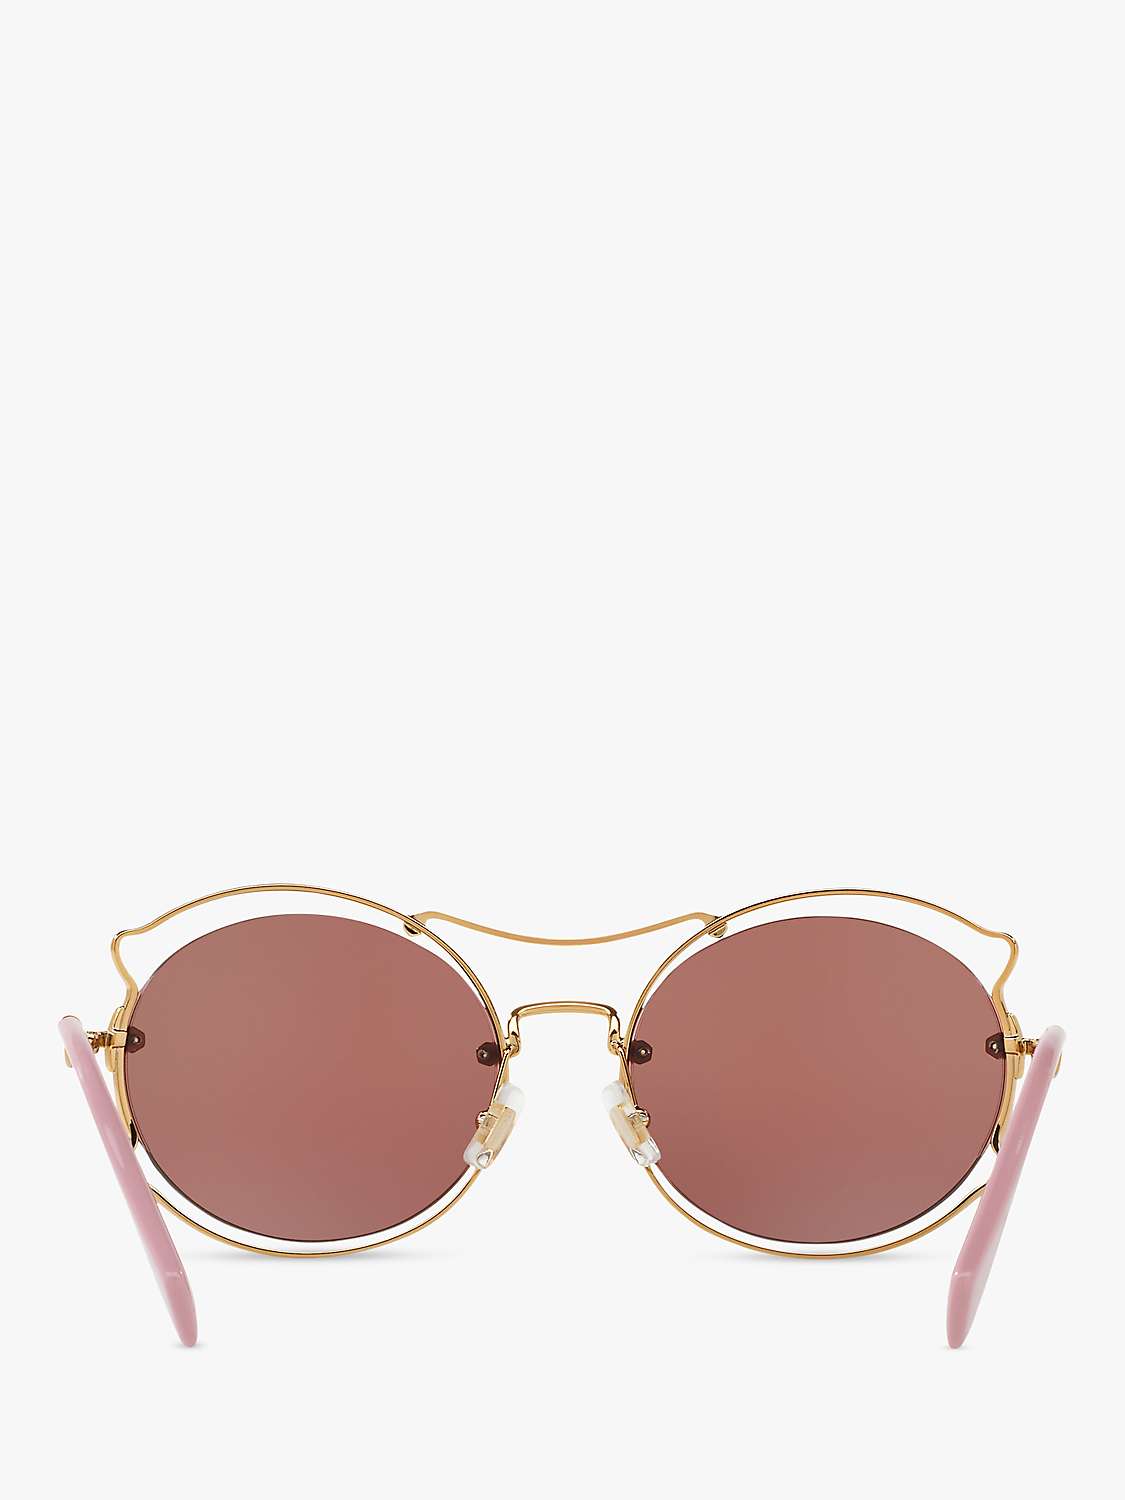 Buy Miu Miu MU 50SS Women's Irregular Sunglasses, Antique Gold/Purple Online at johnlewis.com